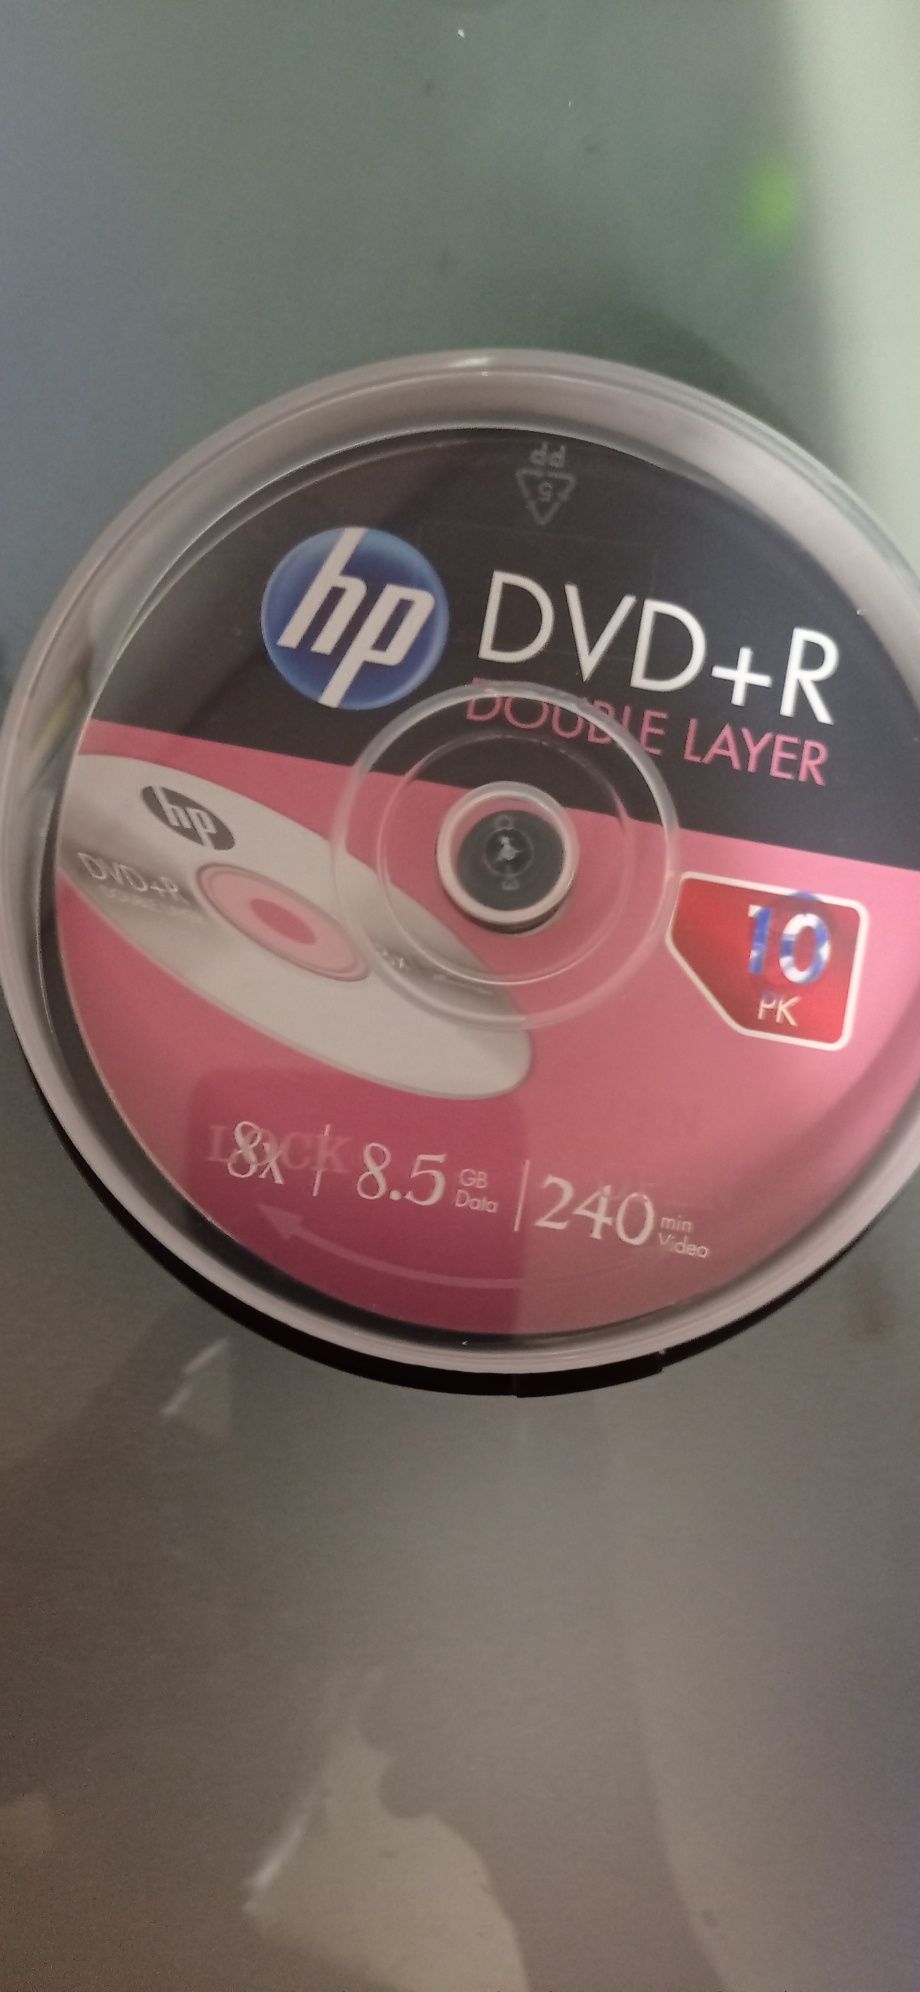 DVD dl + dual layer 8.5 GB HP pack de 8 dvds